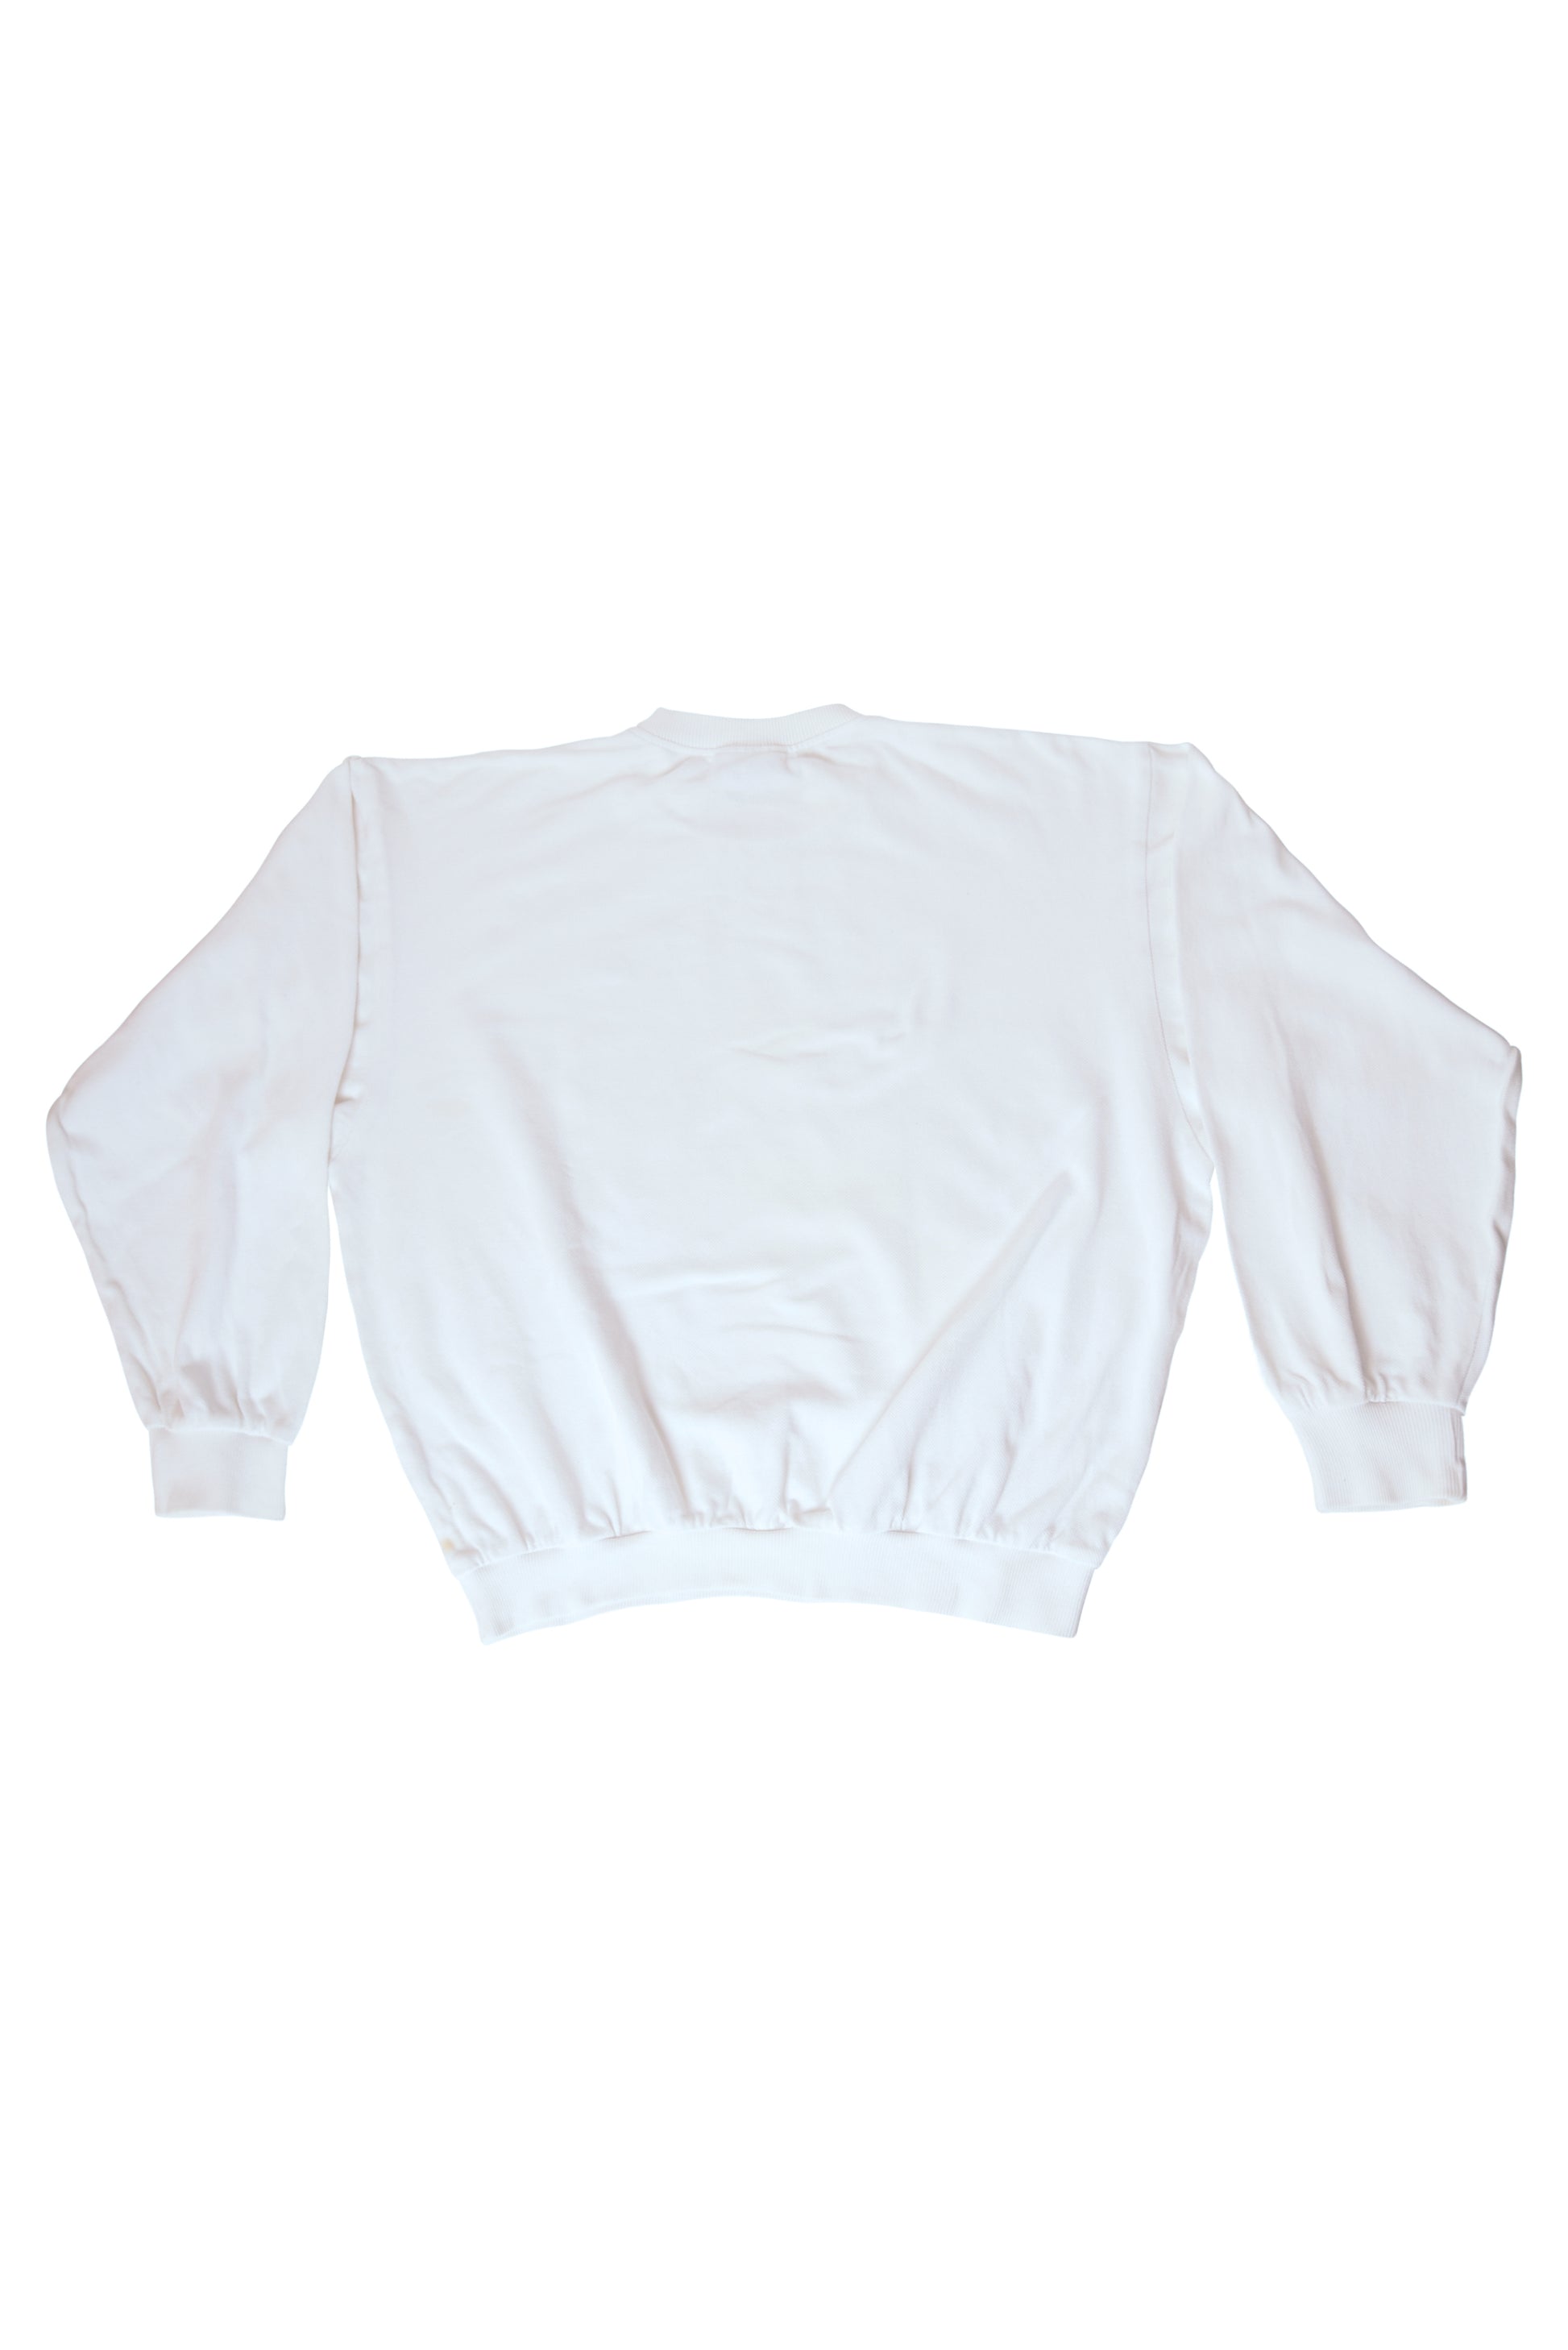 Vintage Lacoste Sweatshirt Crew Neck Pique Made in France 100% Cotton White Size M-L